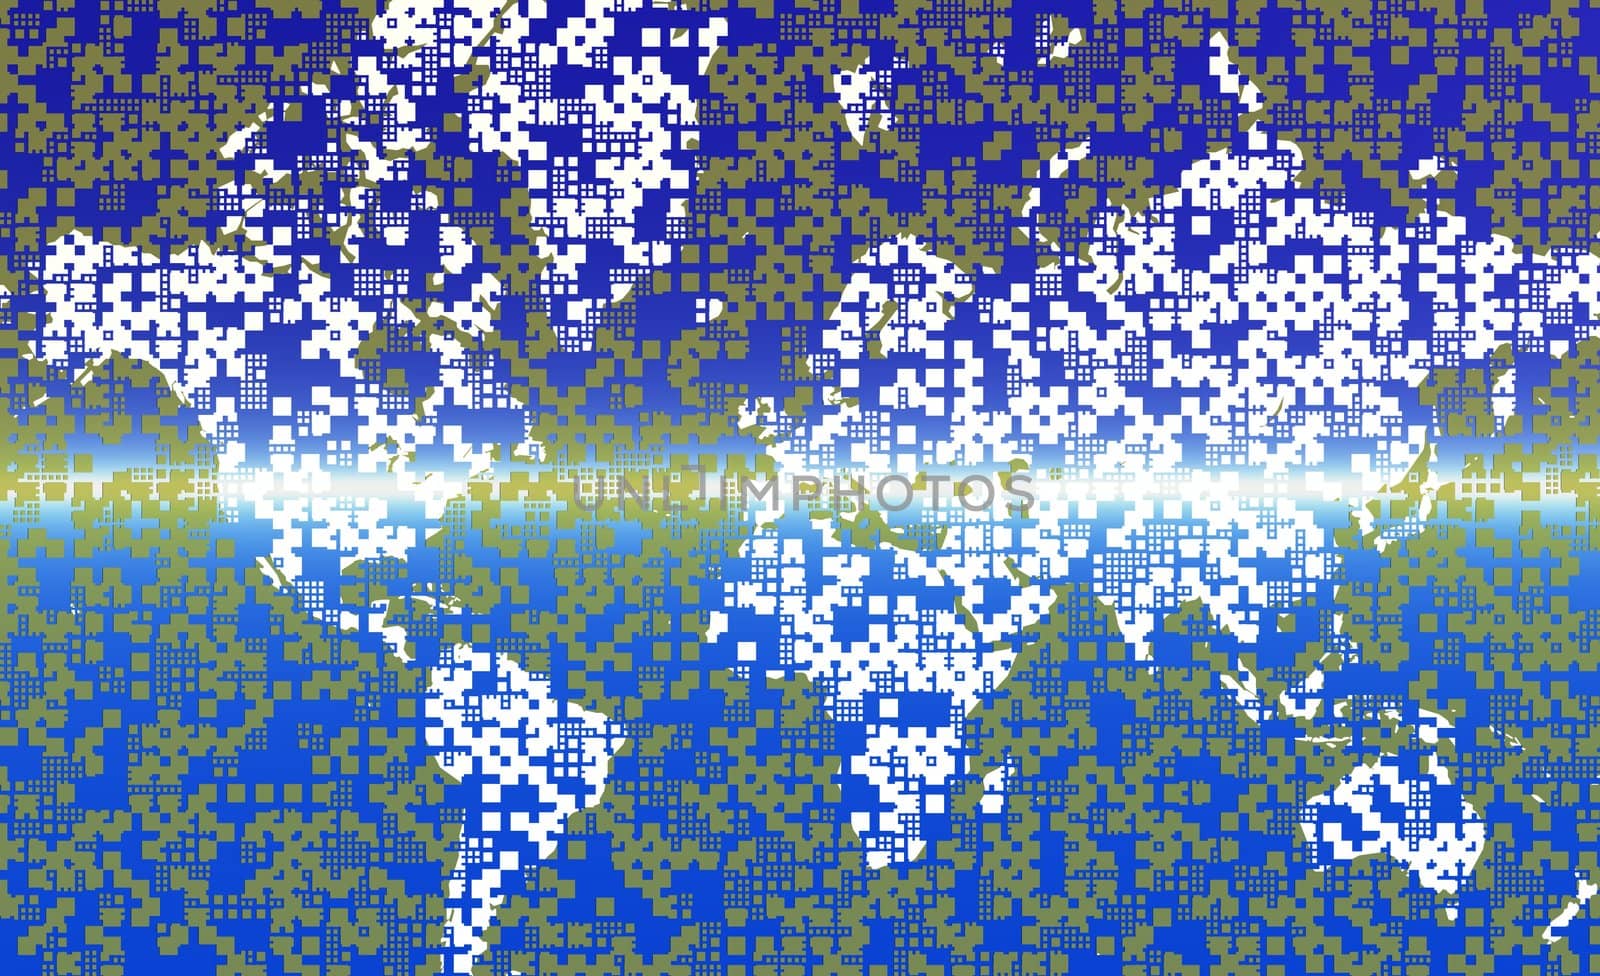 A virtual map of the world created using random blocks.